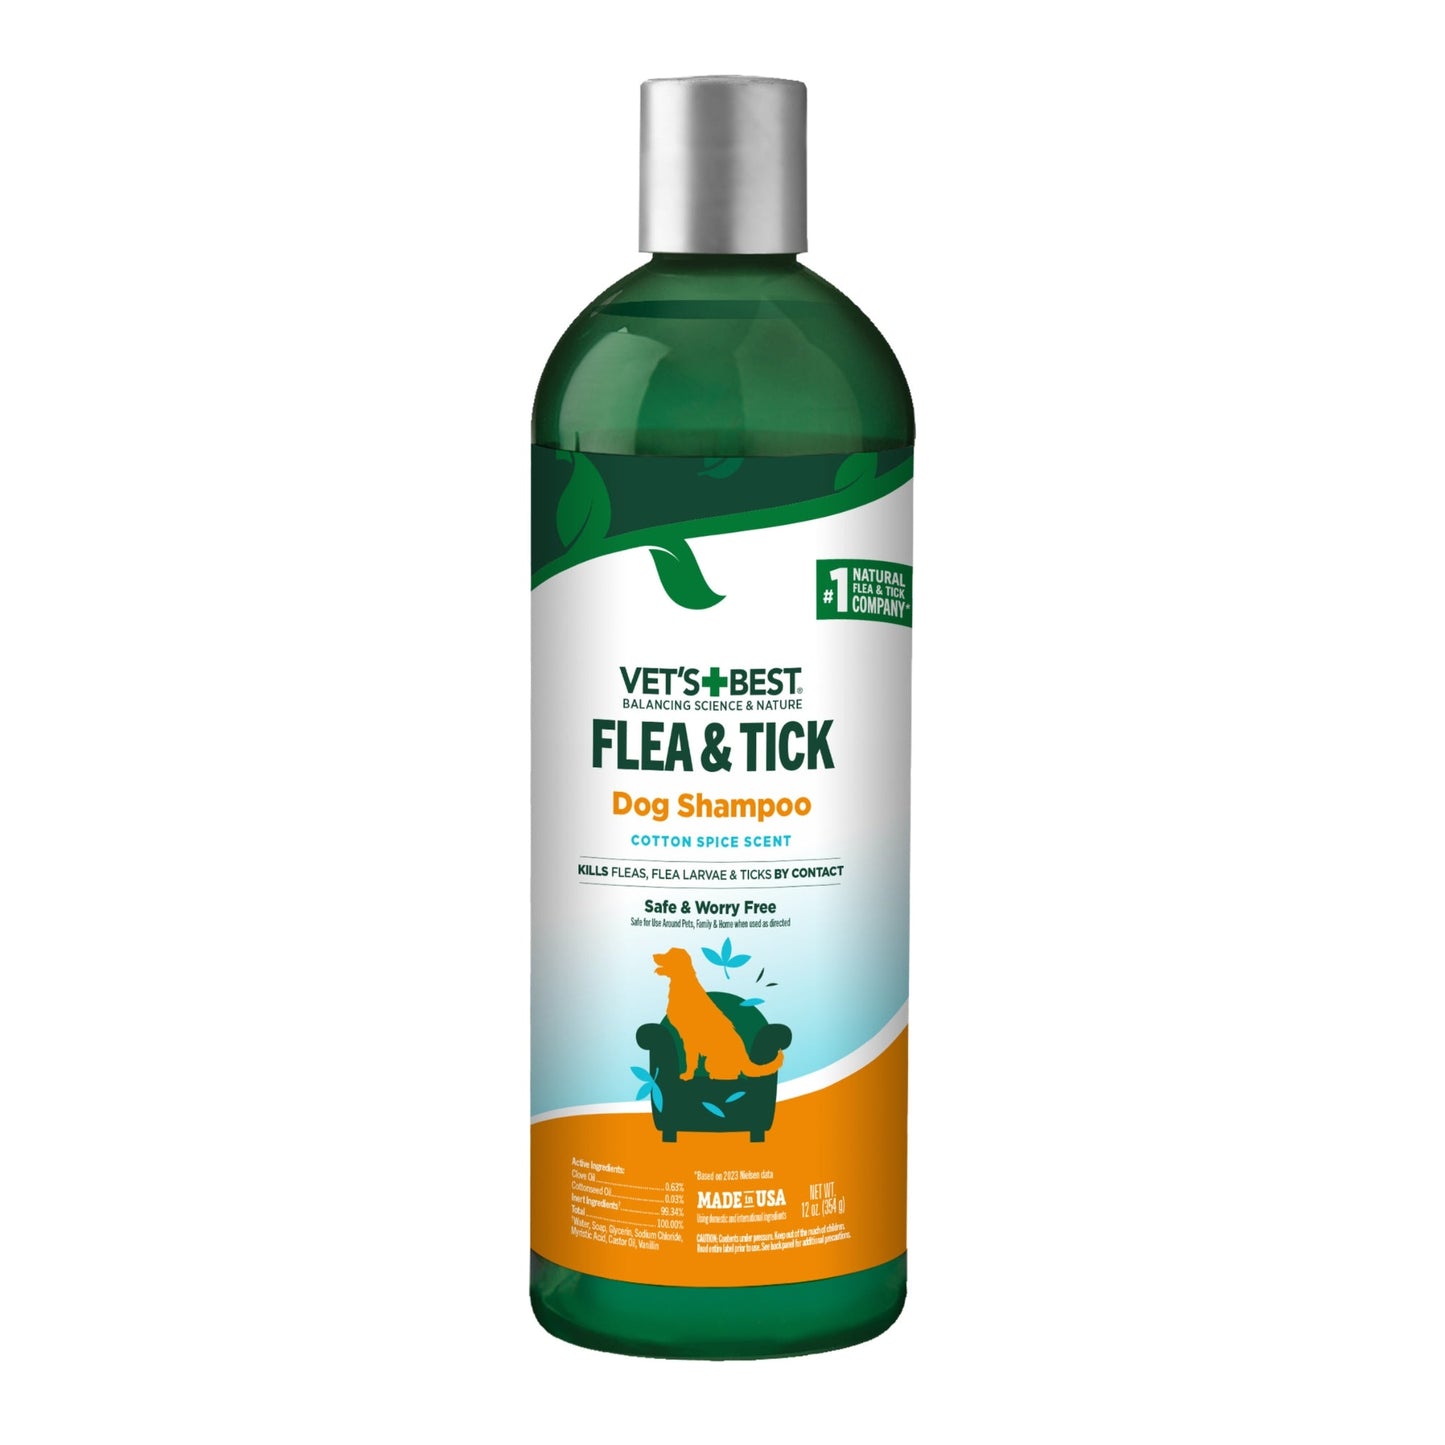 Vet's Best Flea & Tick Dog Shampoo Cotton Spice Scent, 1ea/12oz.